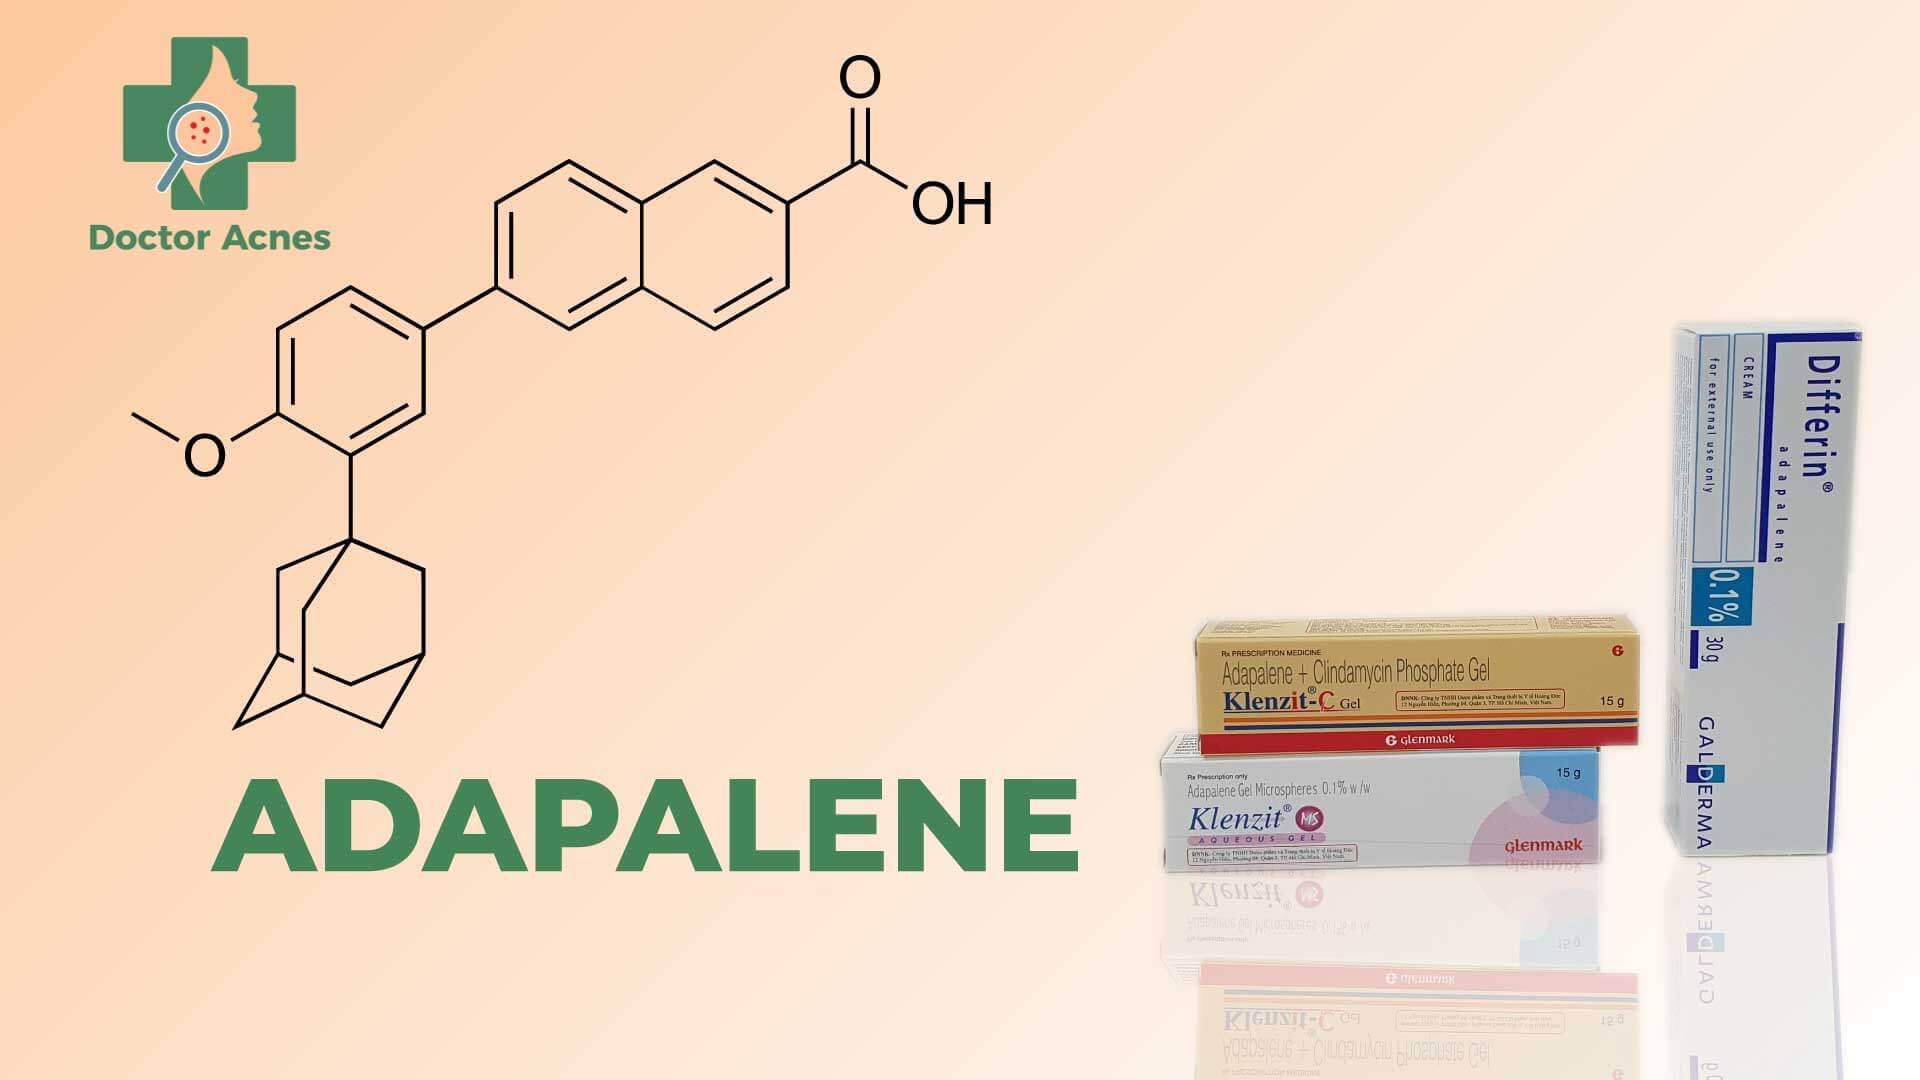 Adapalene - Doctor Acnes